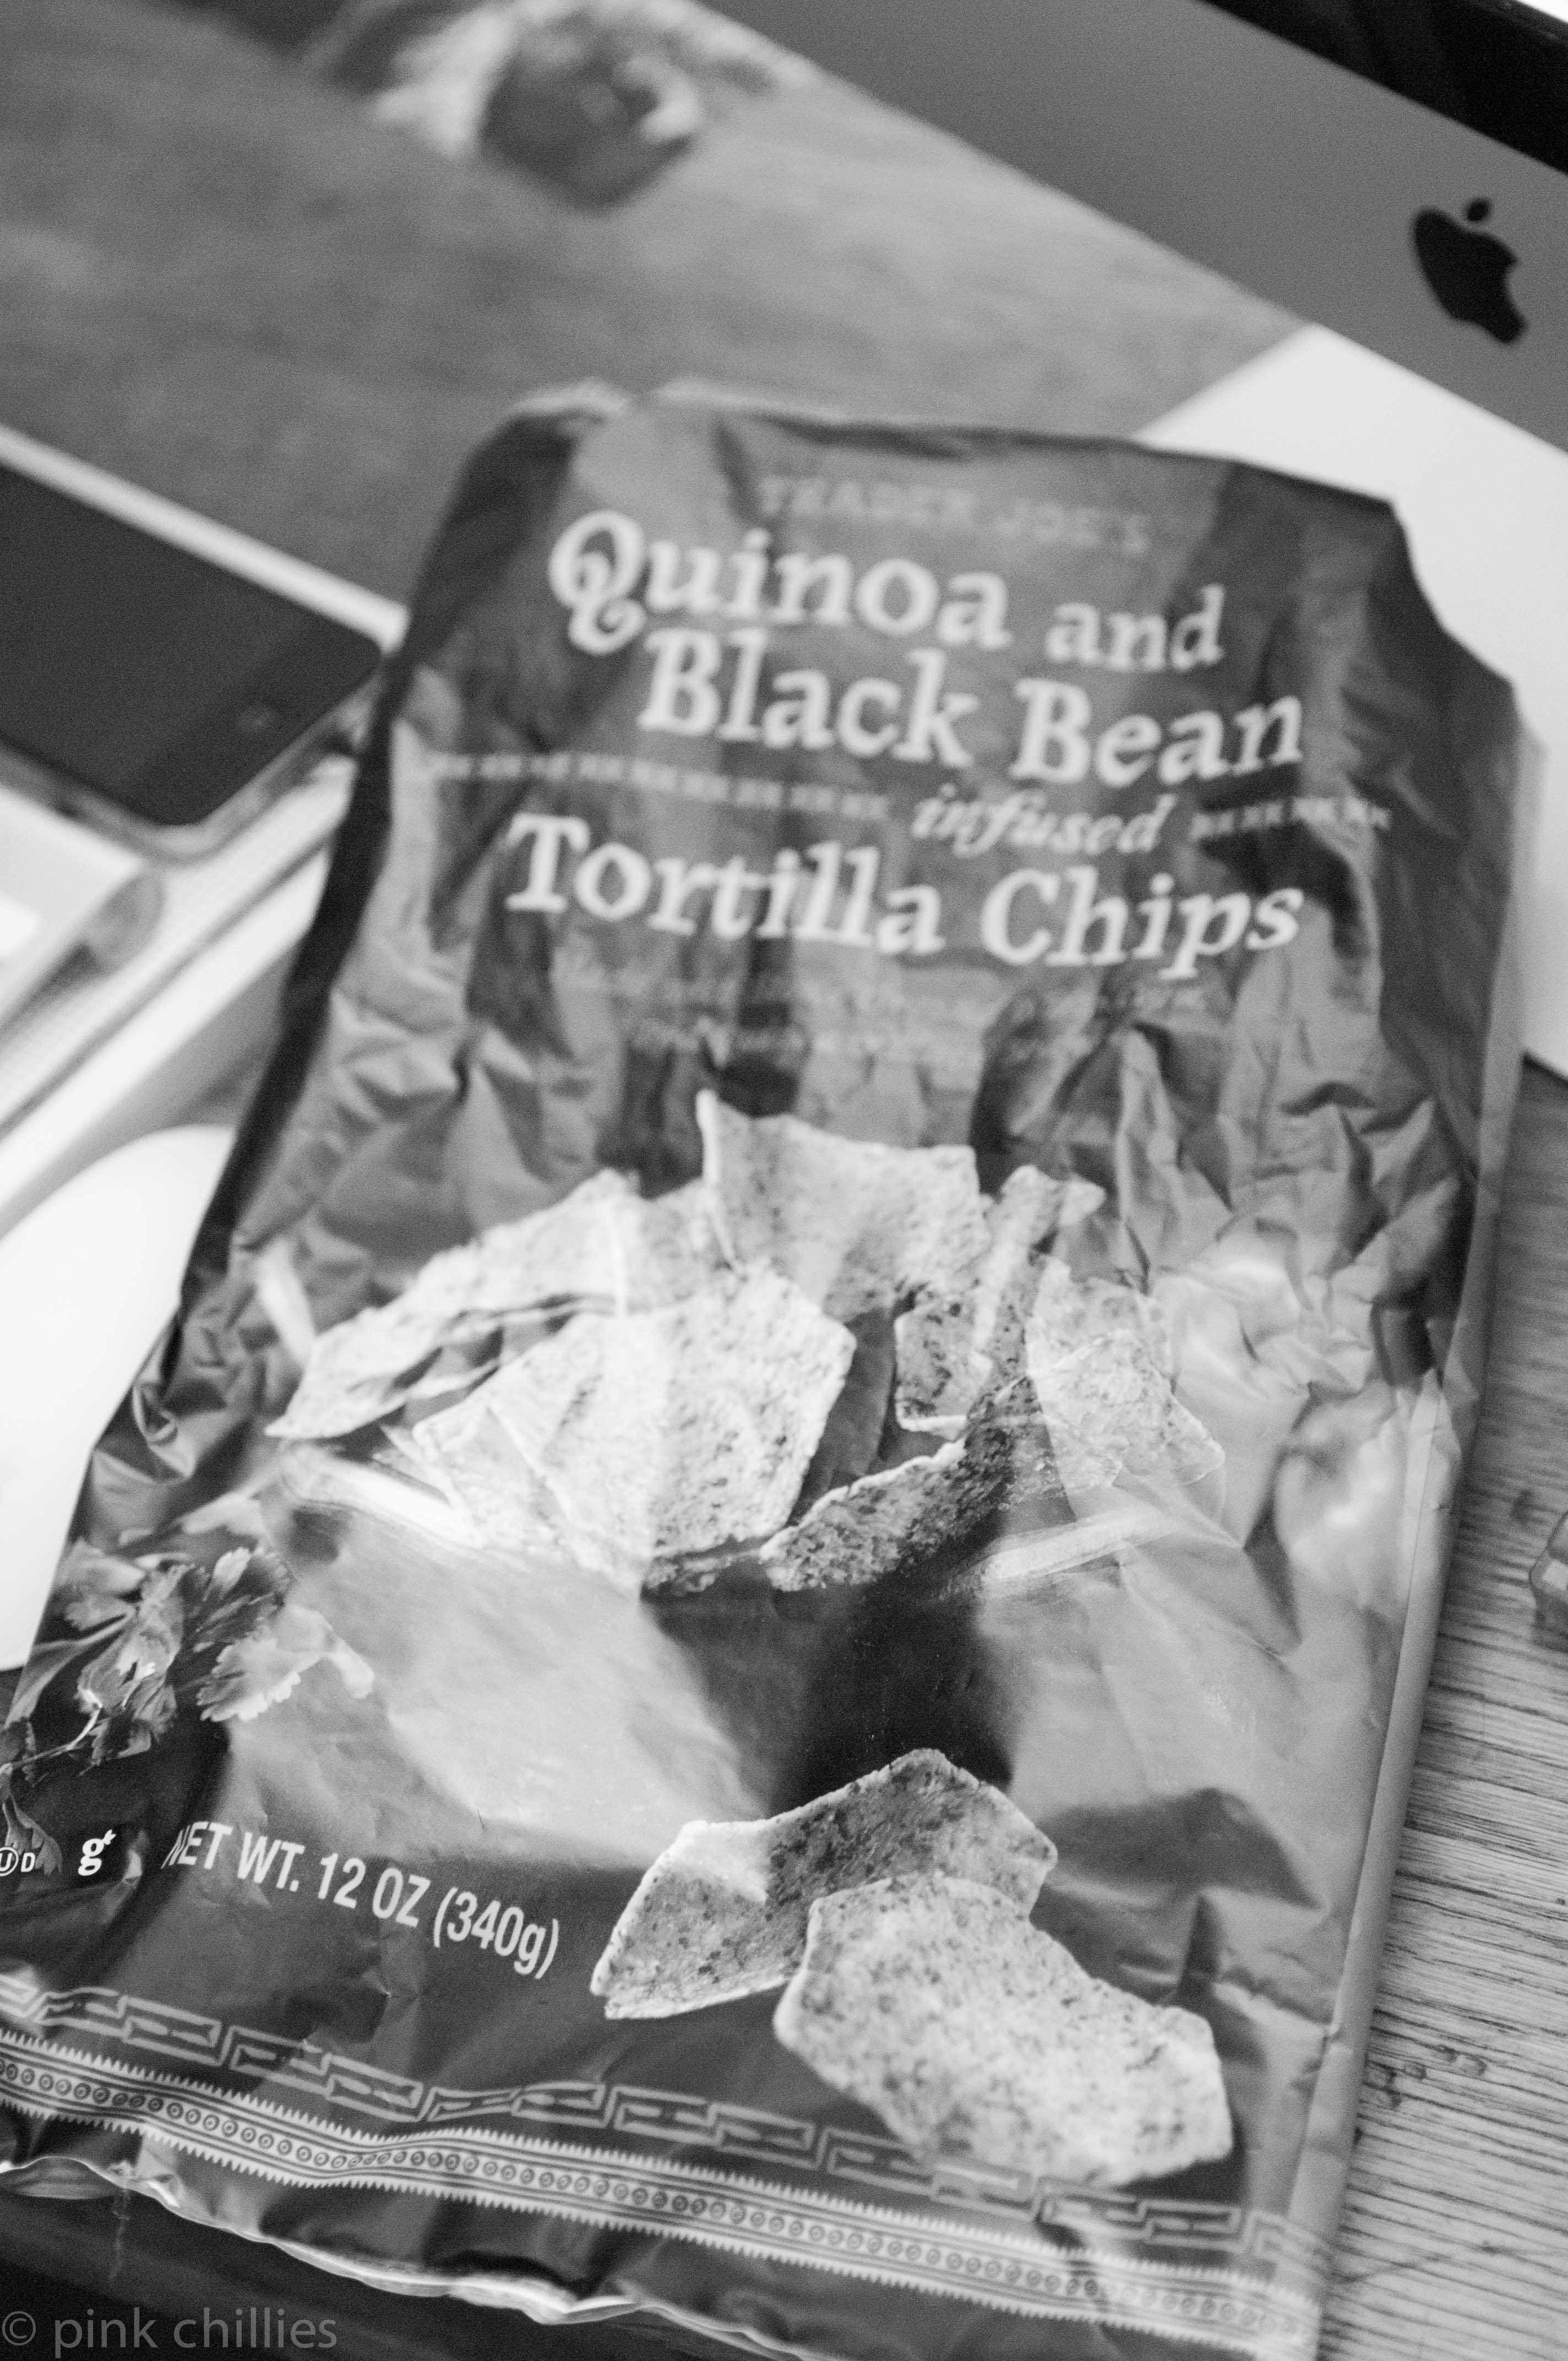 ZAJ_0554Quinoa and Black Bean Tortilia Chips